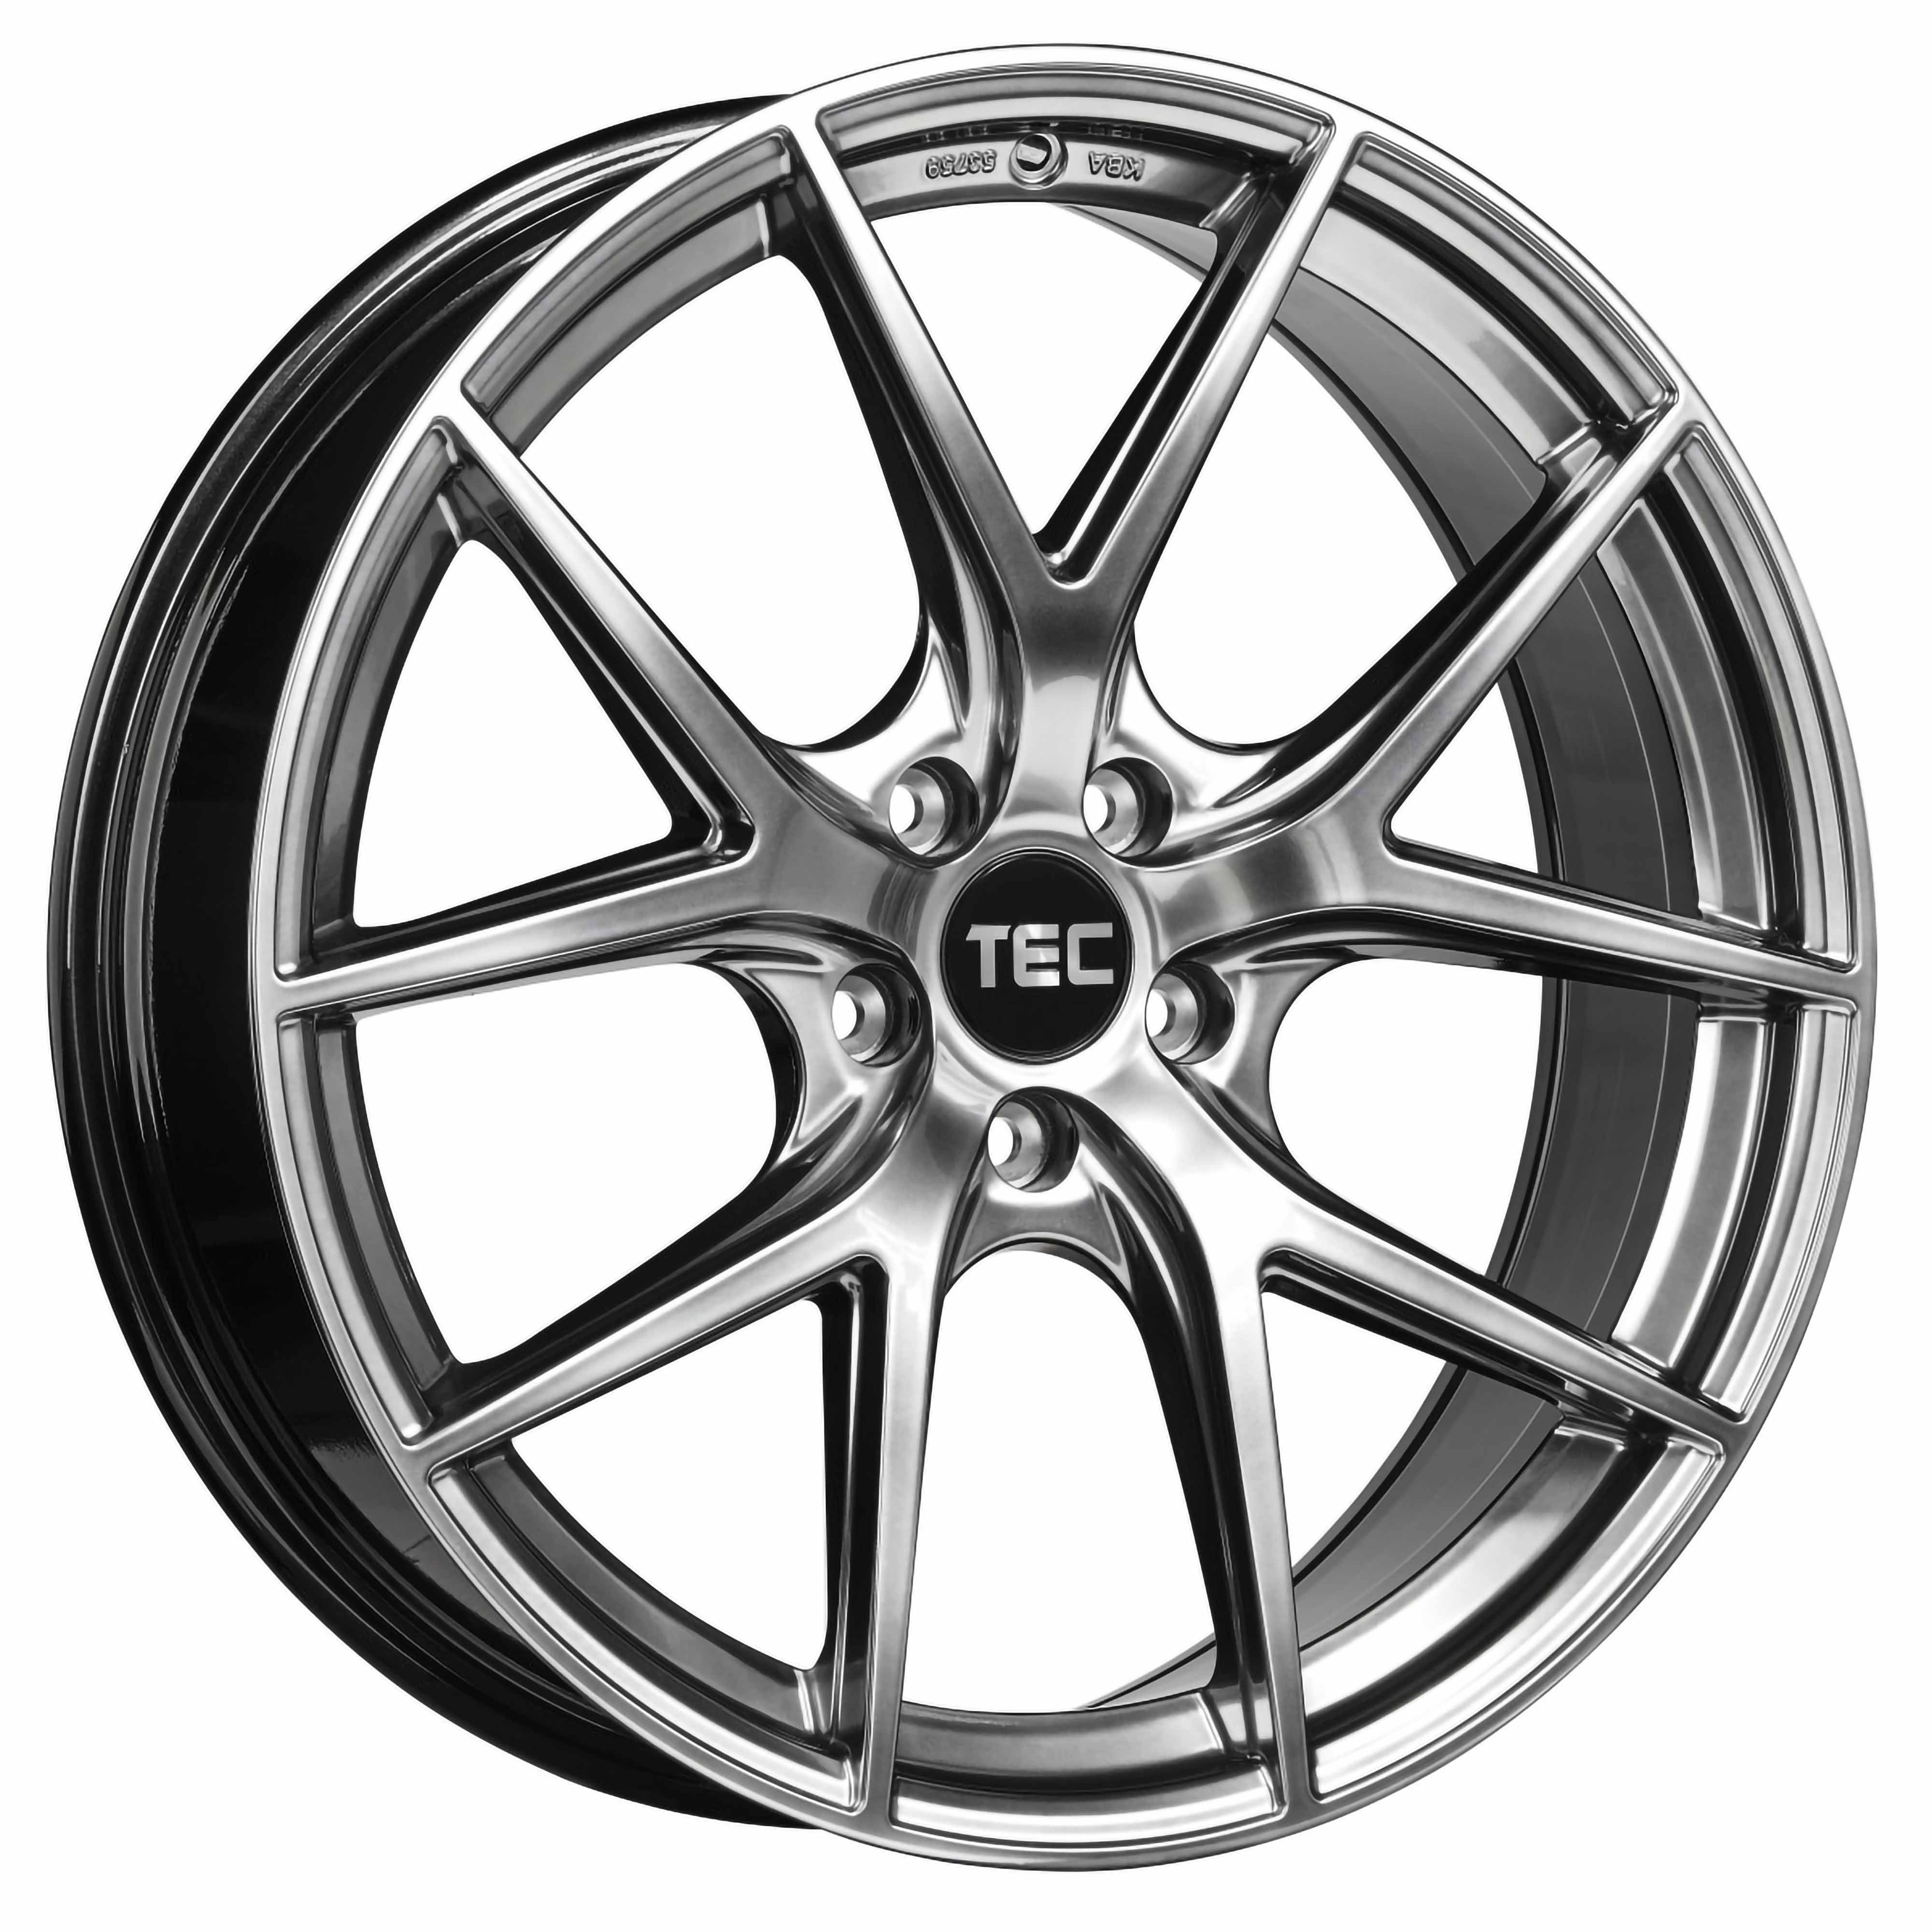 GT in Model Tesla Kompletträder Felgen 6 Evo 20 – Titan - TEC Tesvolution 3 Zoll / Titan -